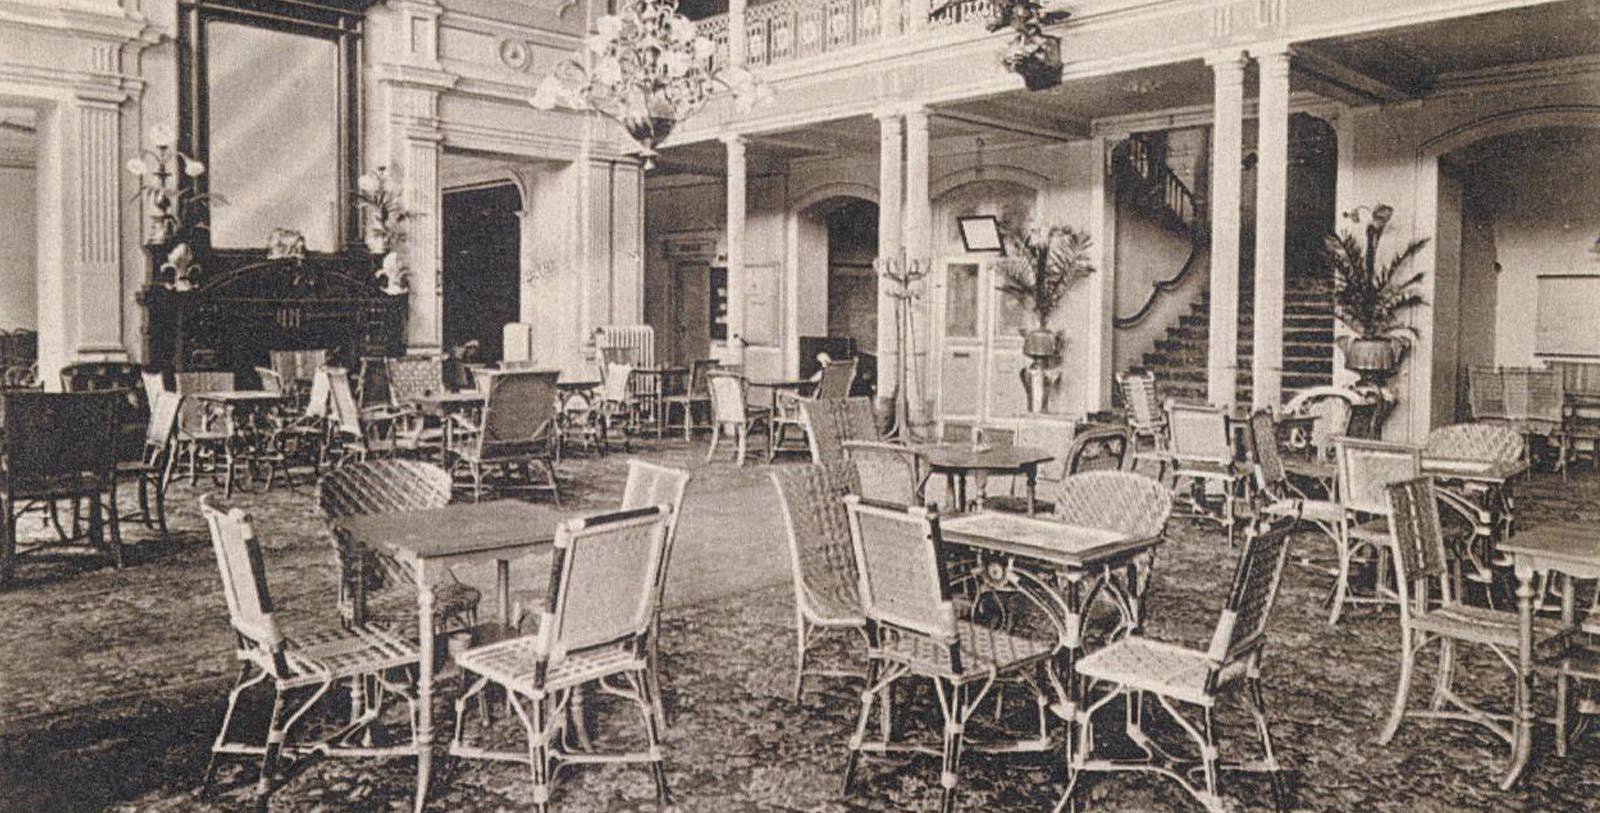 Historic Exterior of Grand Hotel des Bains in St. Mortiz, Switzerland